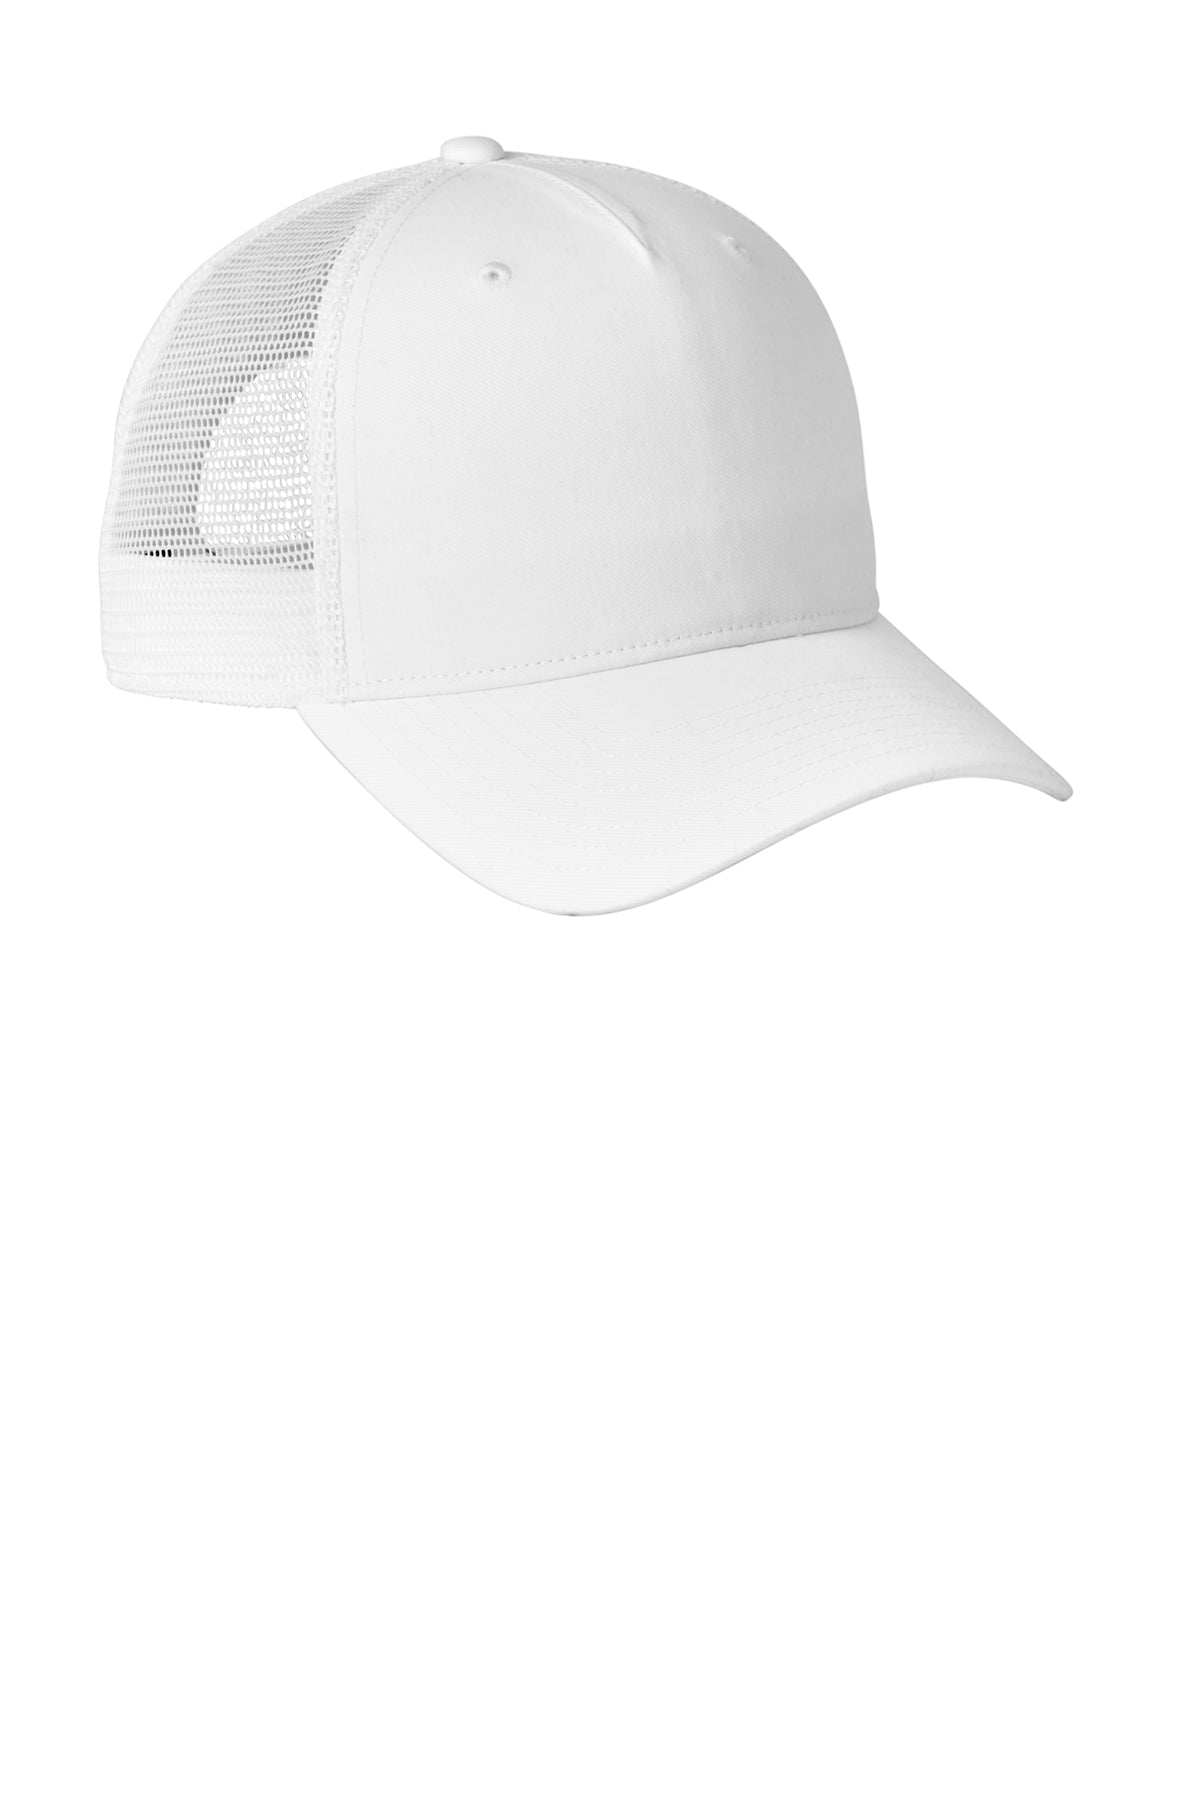 Nike Snapback Mesh Trucker Custom Caps, White